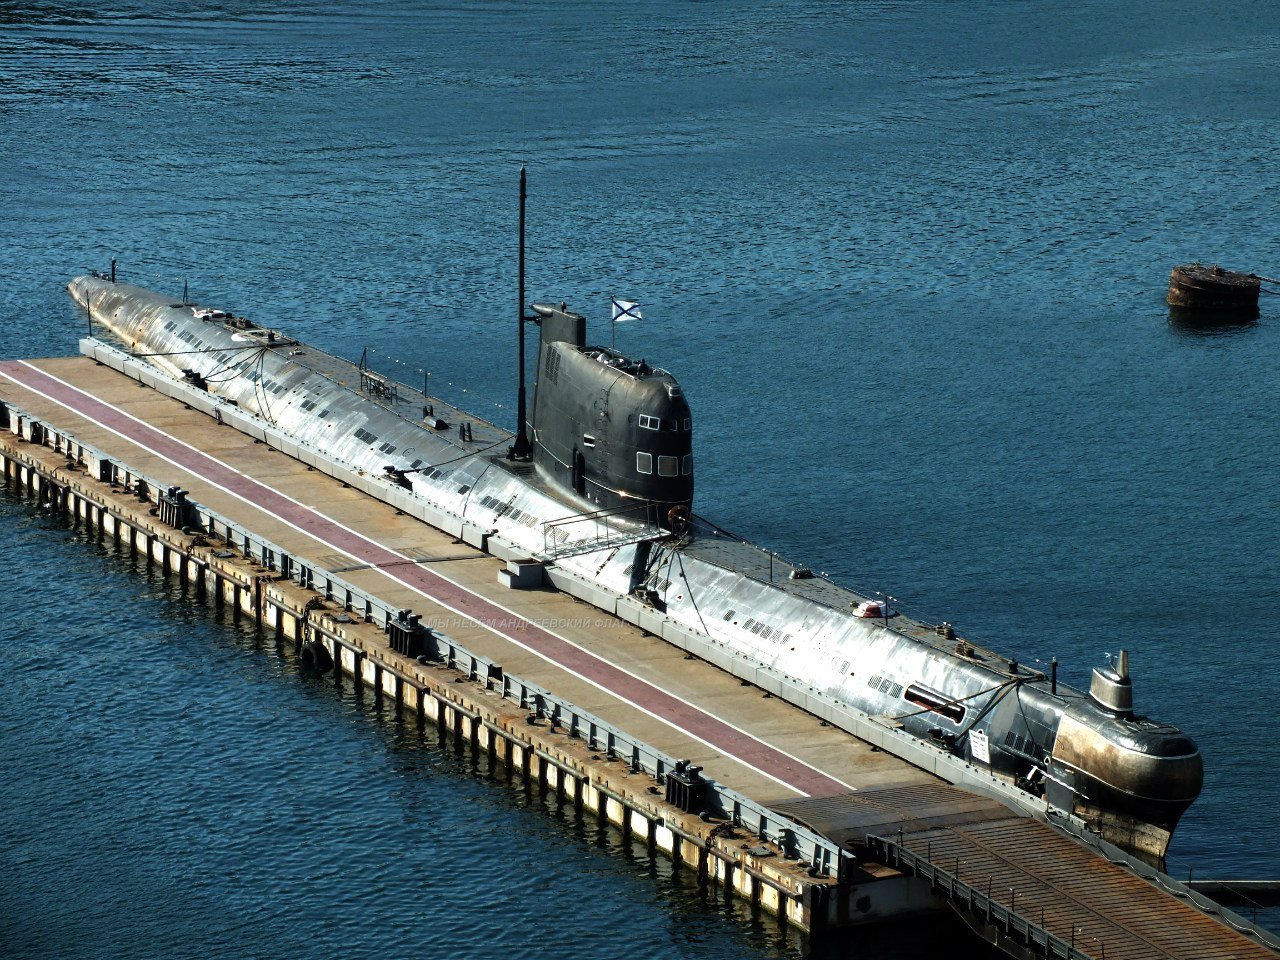 Пл 00. 641б подводная лодка. Подводная лодка проект 641. Дизельная подводная лодка 641 проекта. Дизельная подводная лодка 641 Буки.